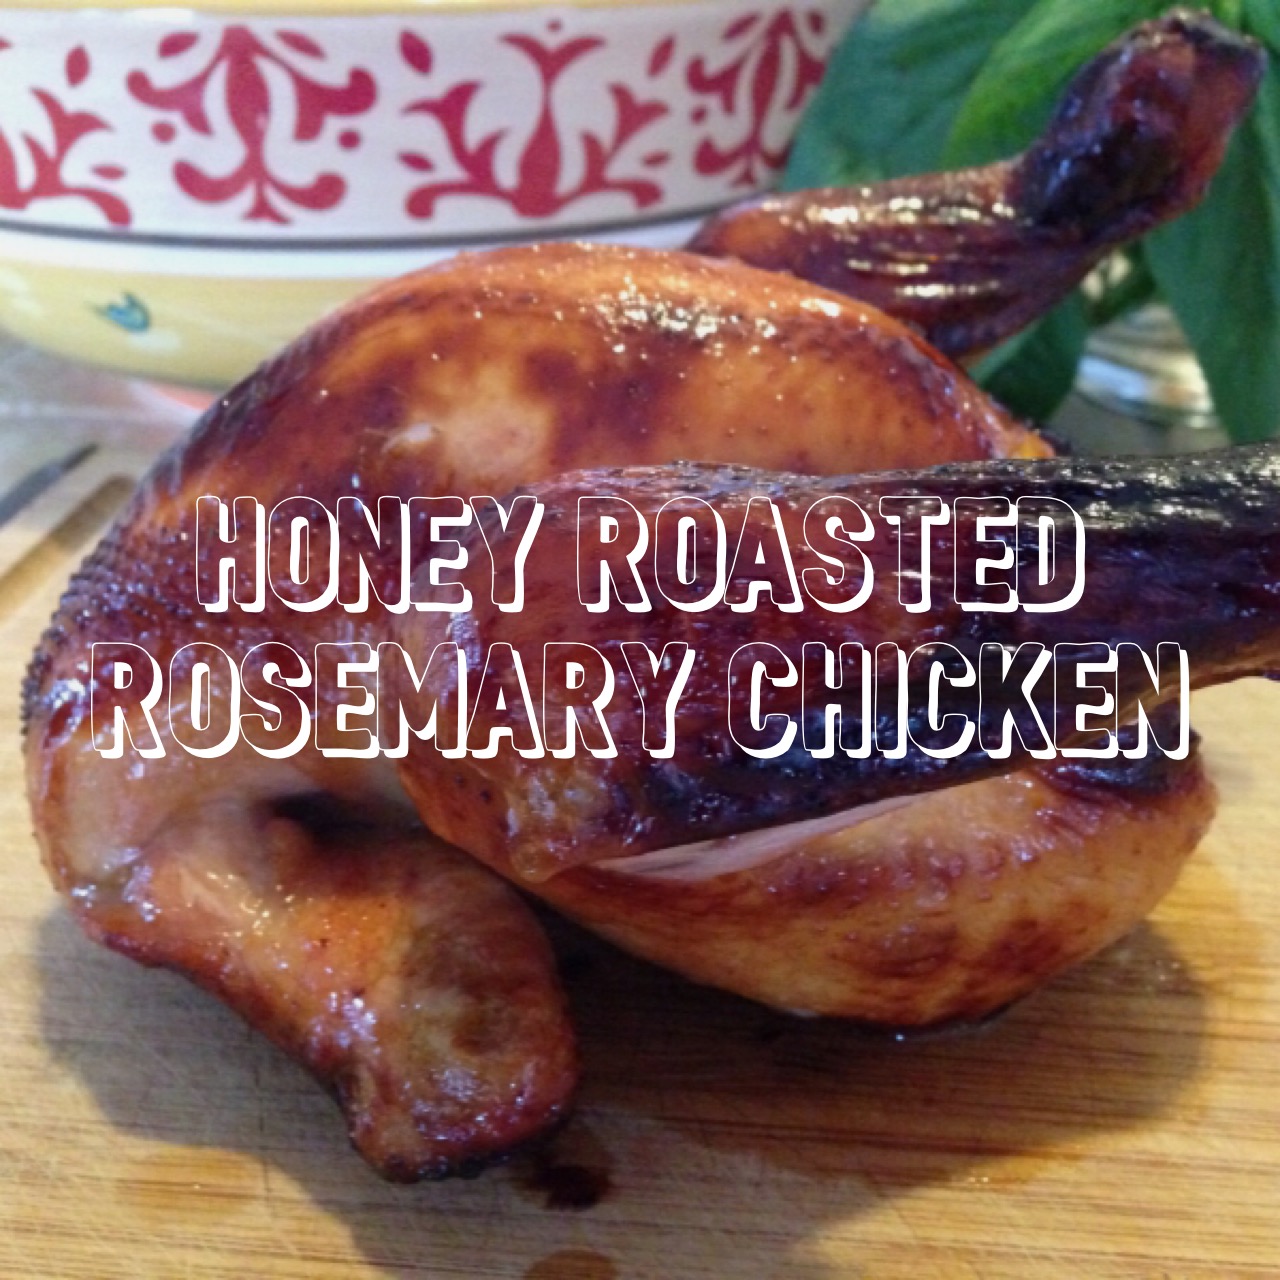 Honey roasted rosemary chicken recipe